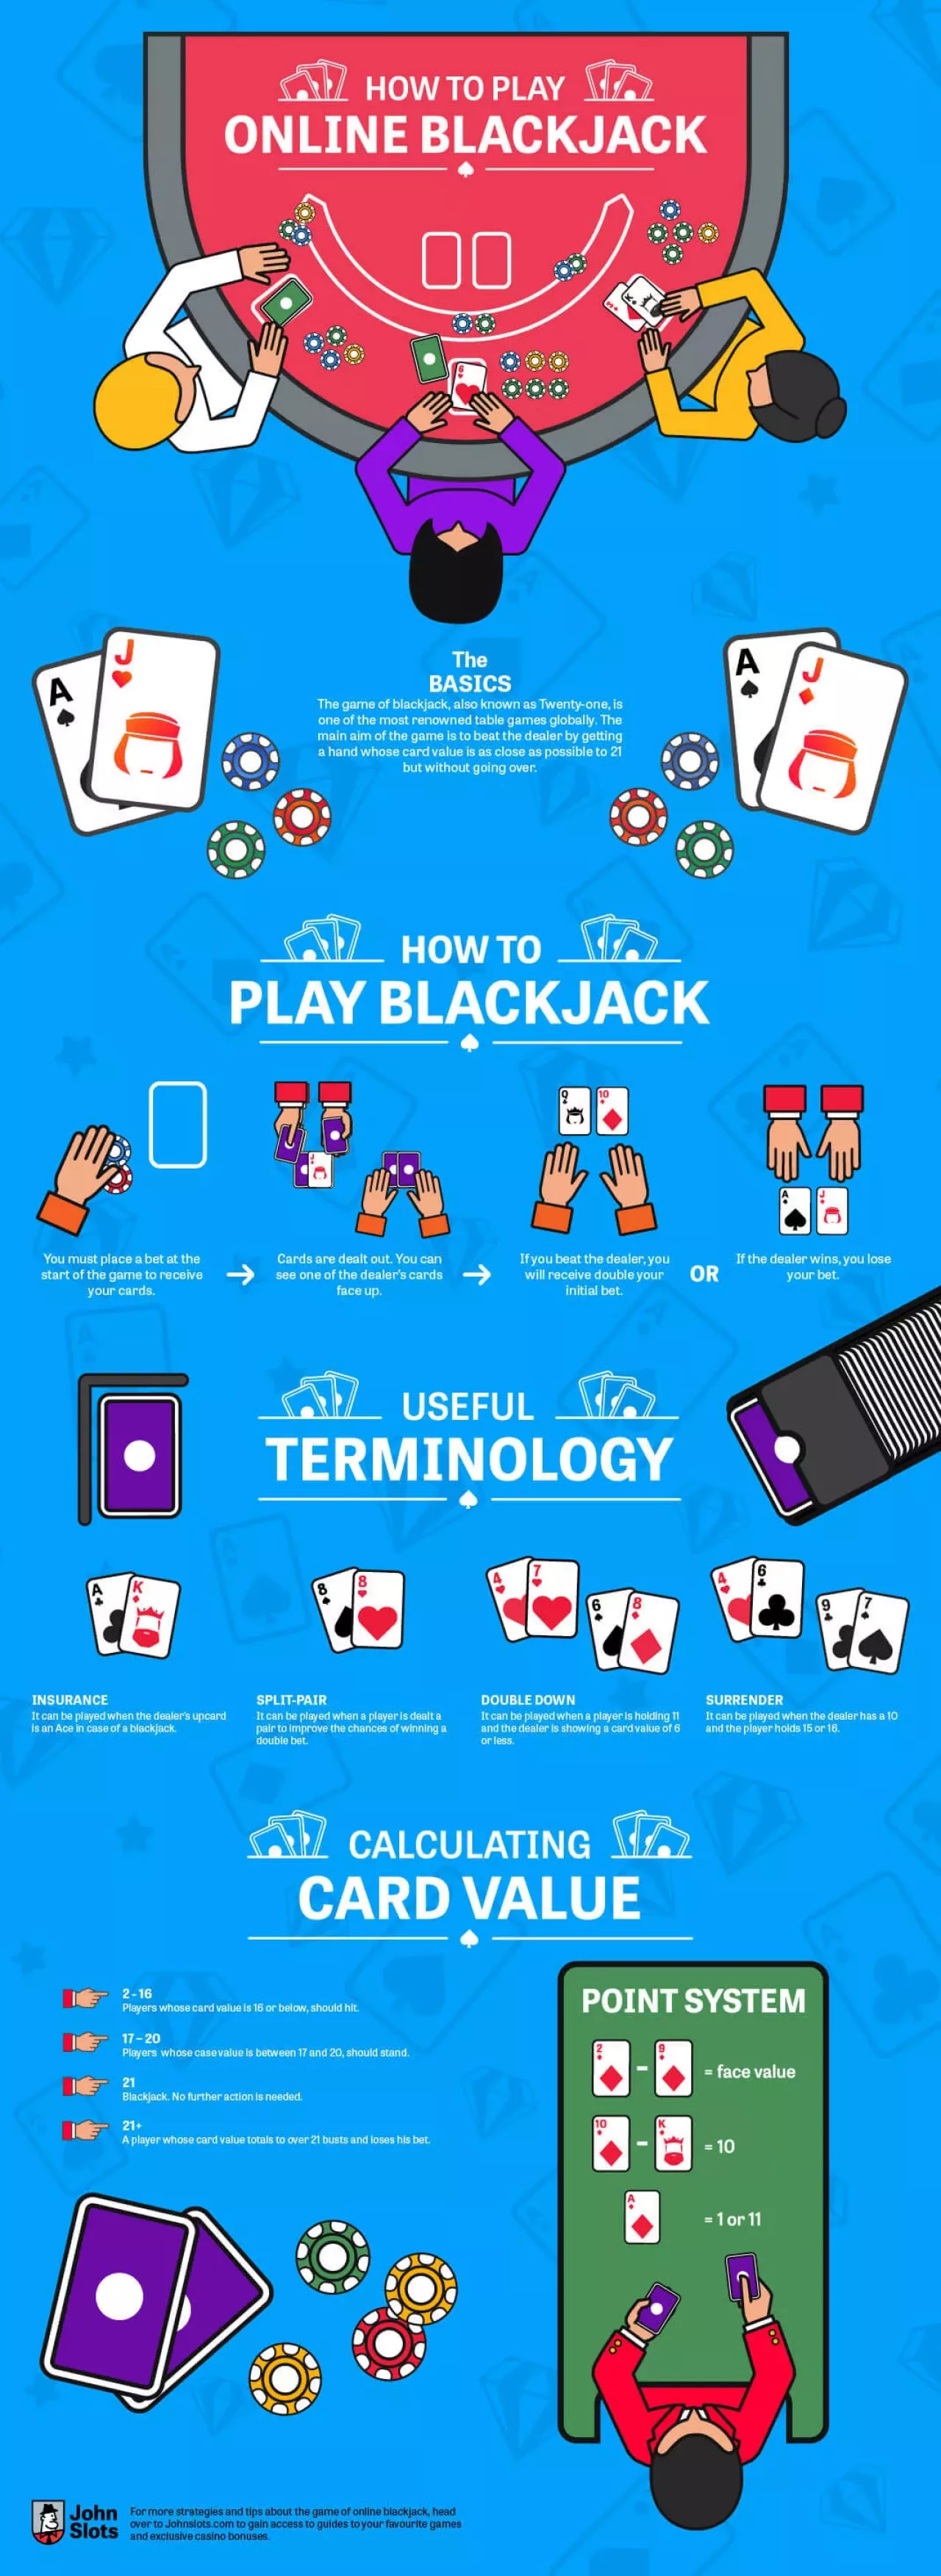 How to play blackjack cheat sheet